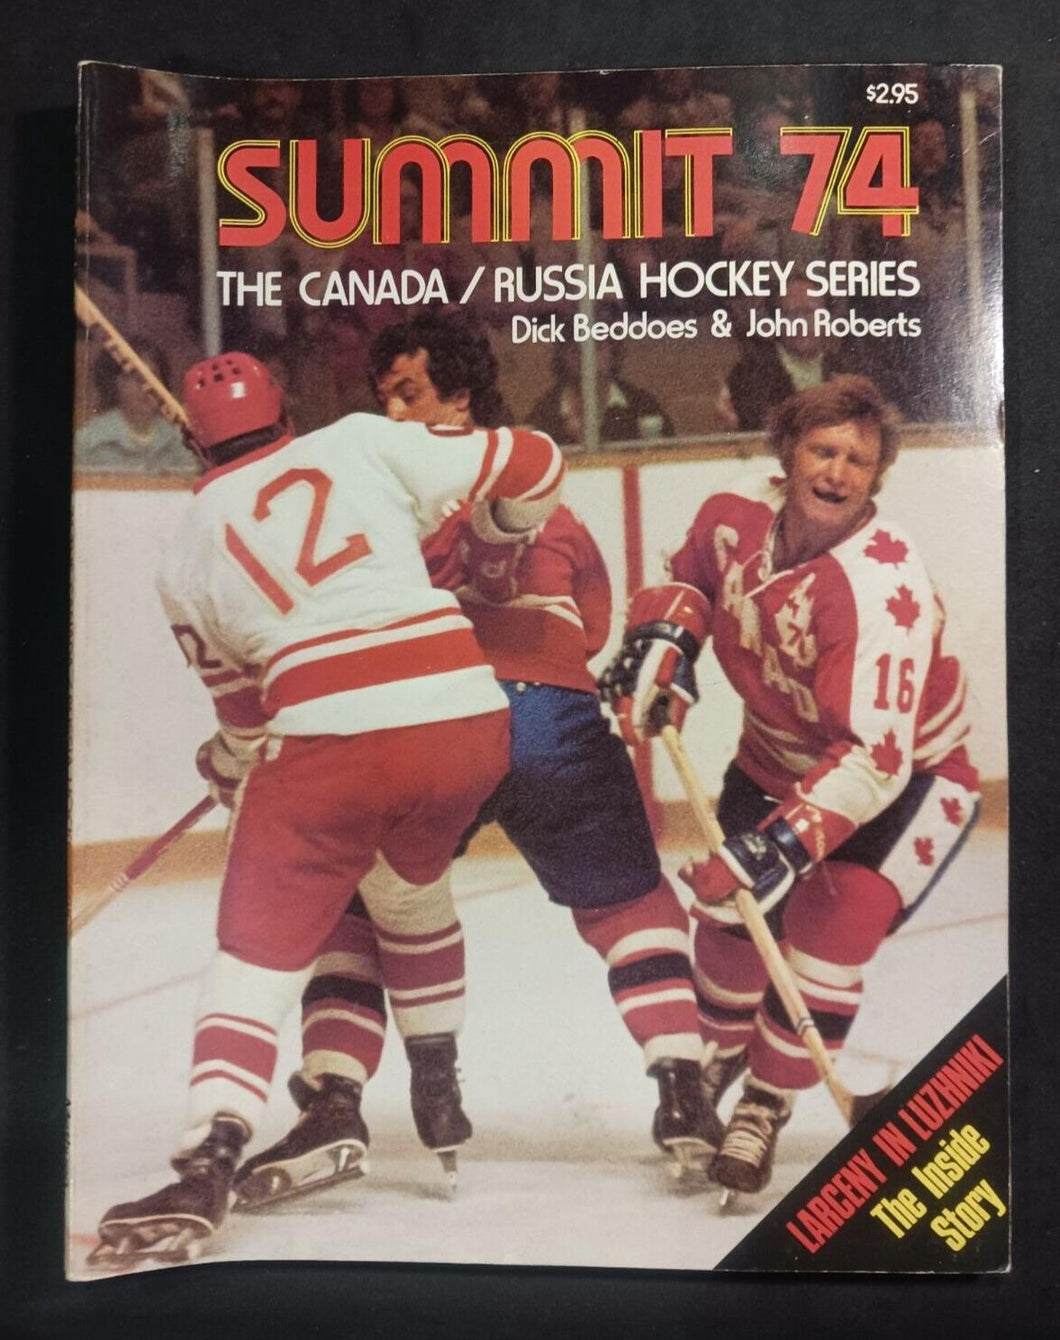 1974 Hockey Summit Canada / Russia Series Issue